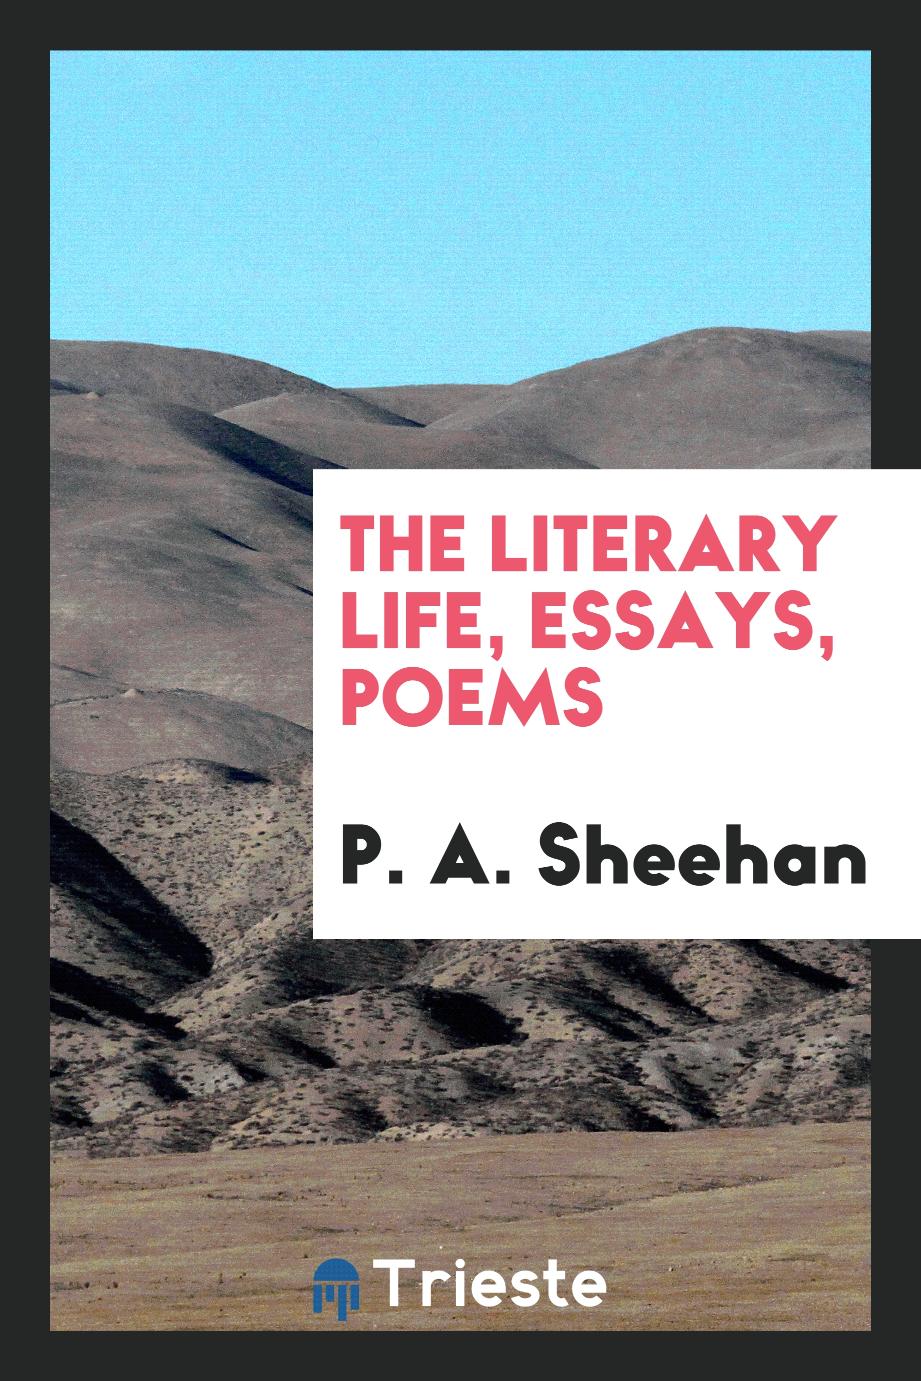 The literary life, essays, poems